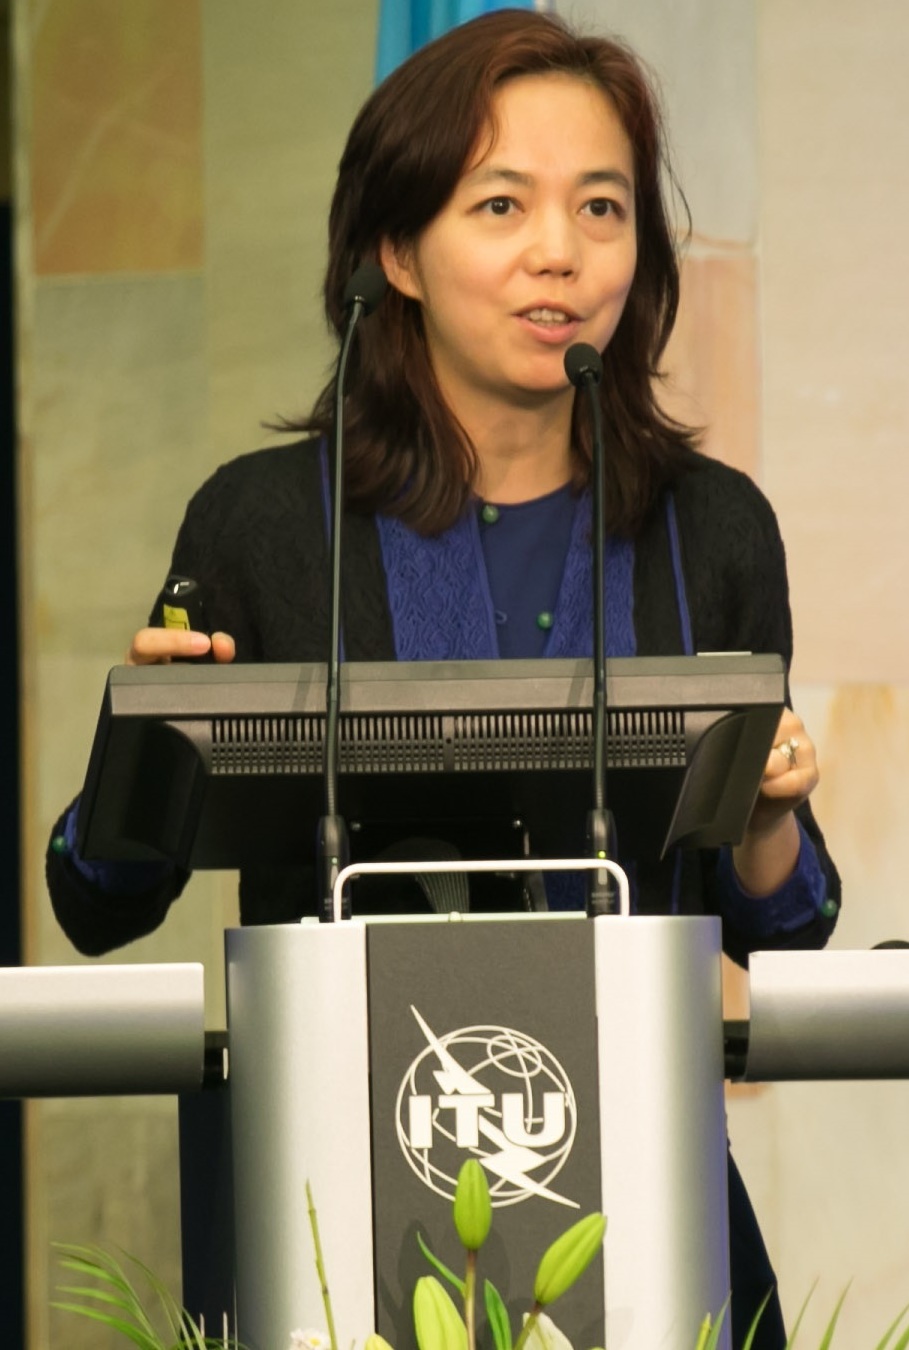 Fei-Fei Li speaking at AI for Good event in 2017